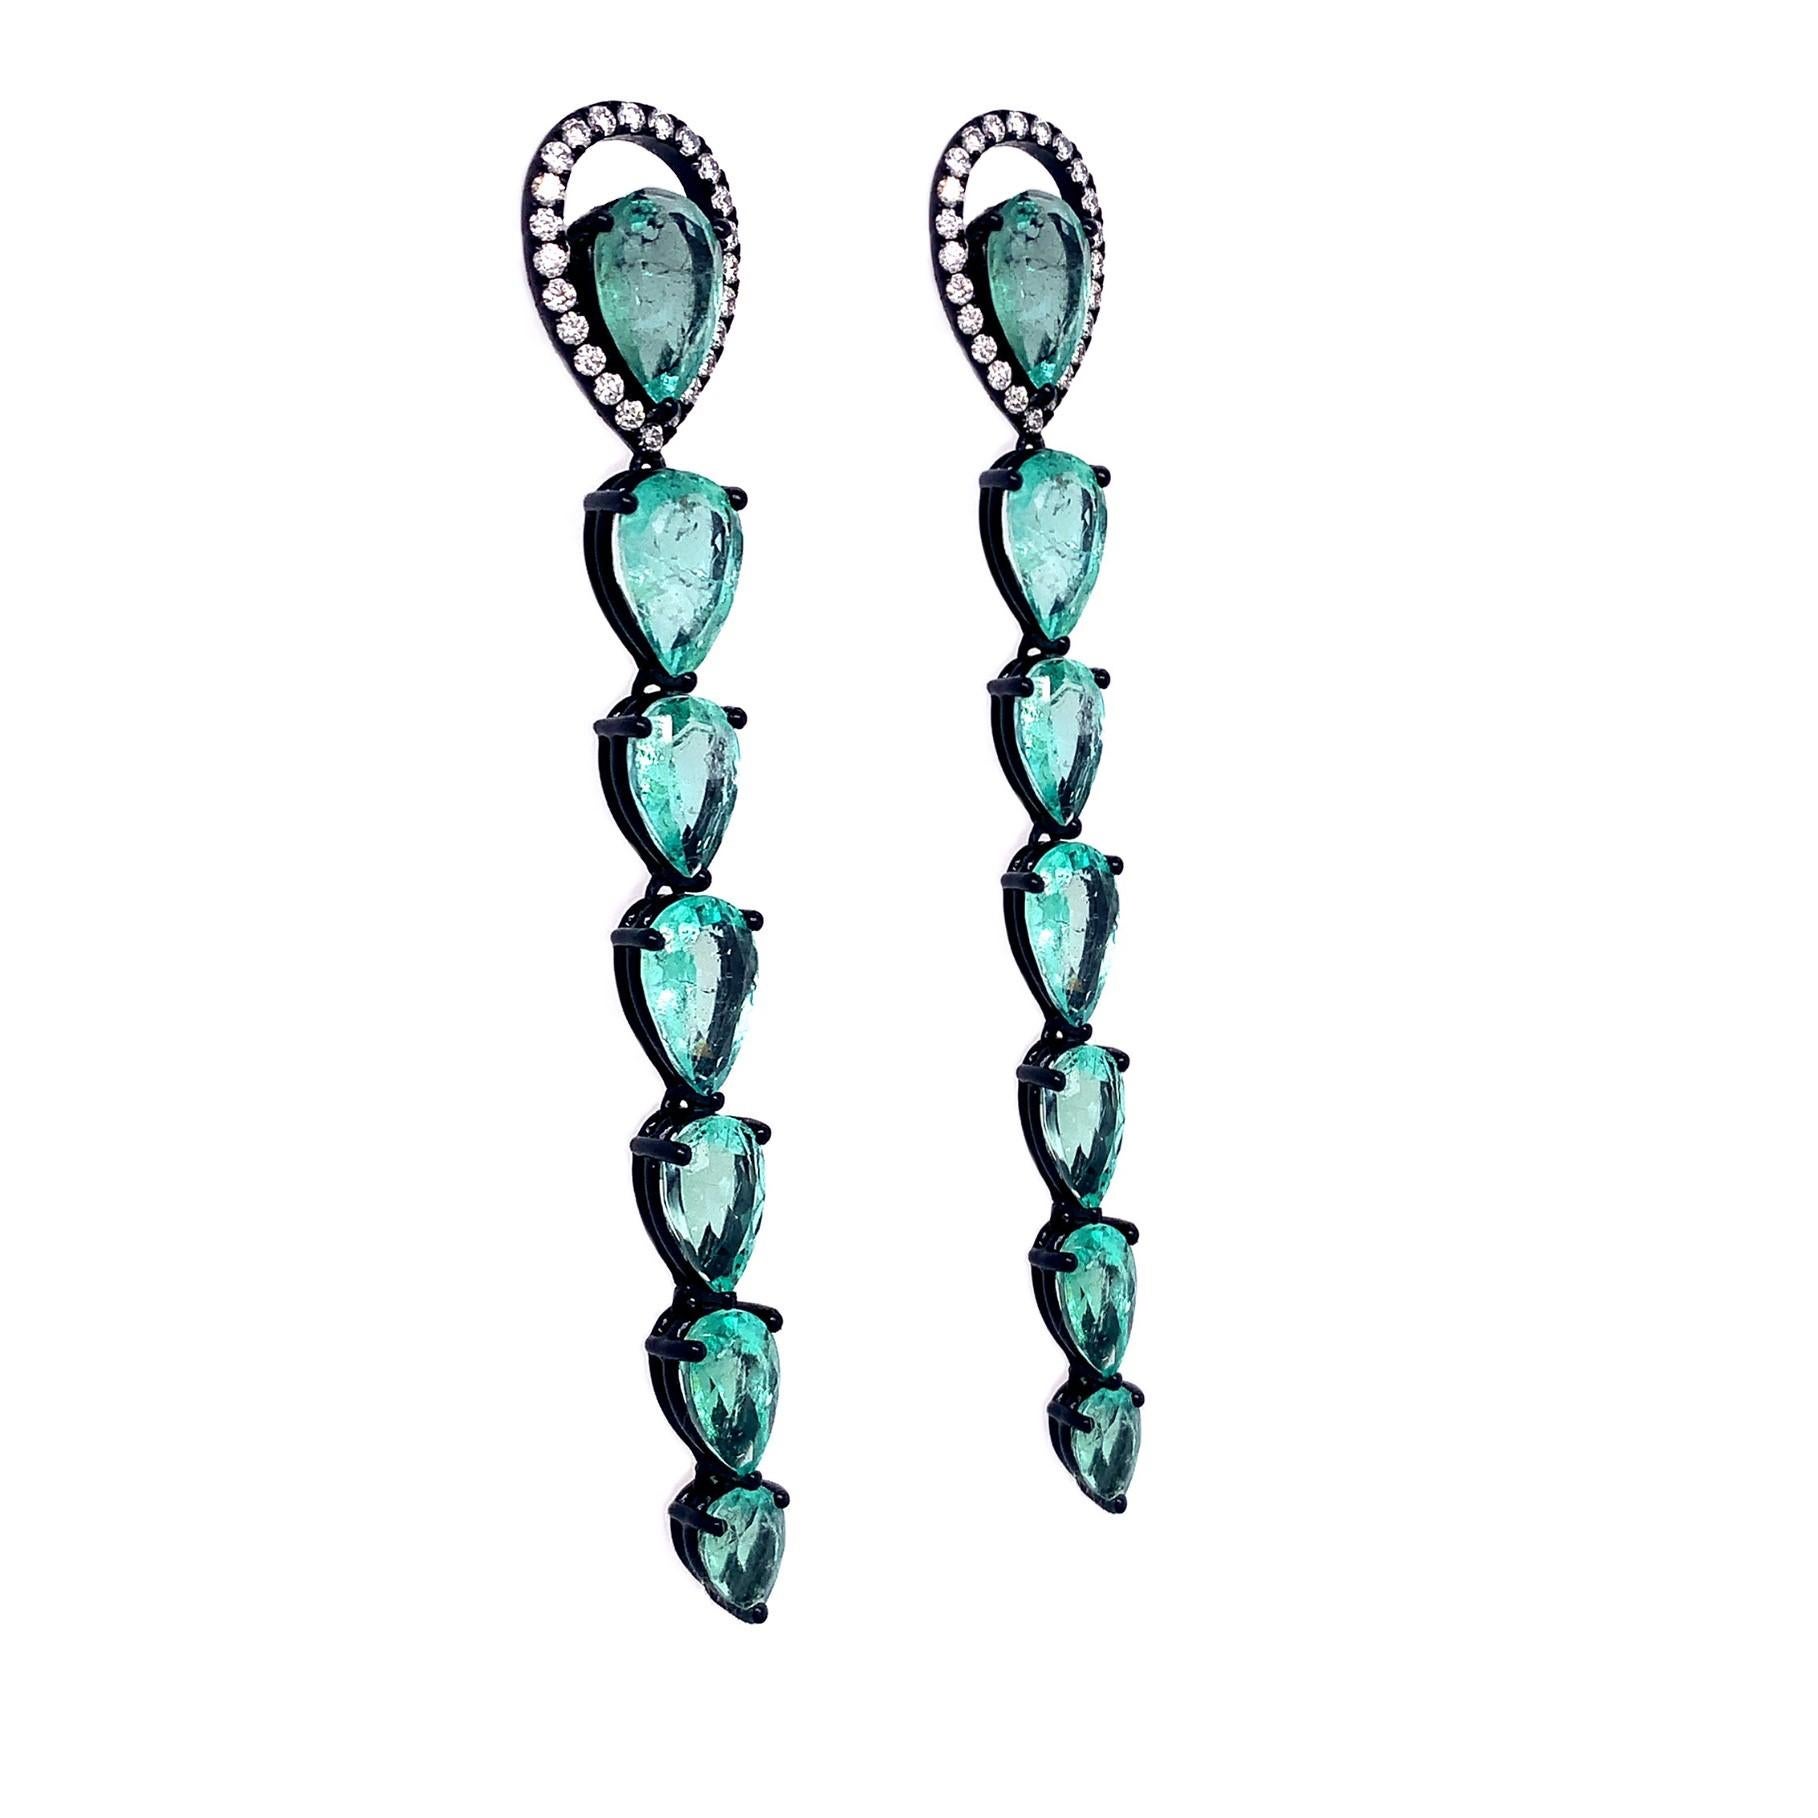 Contemporary Ruchi New York Emerald and Diamond Earrings